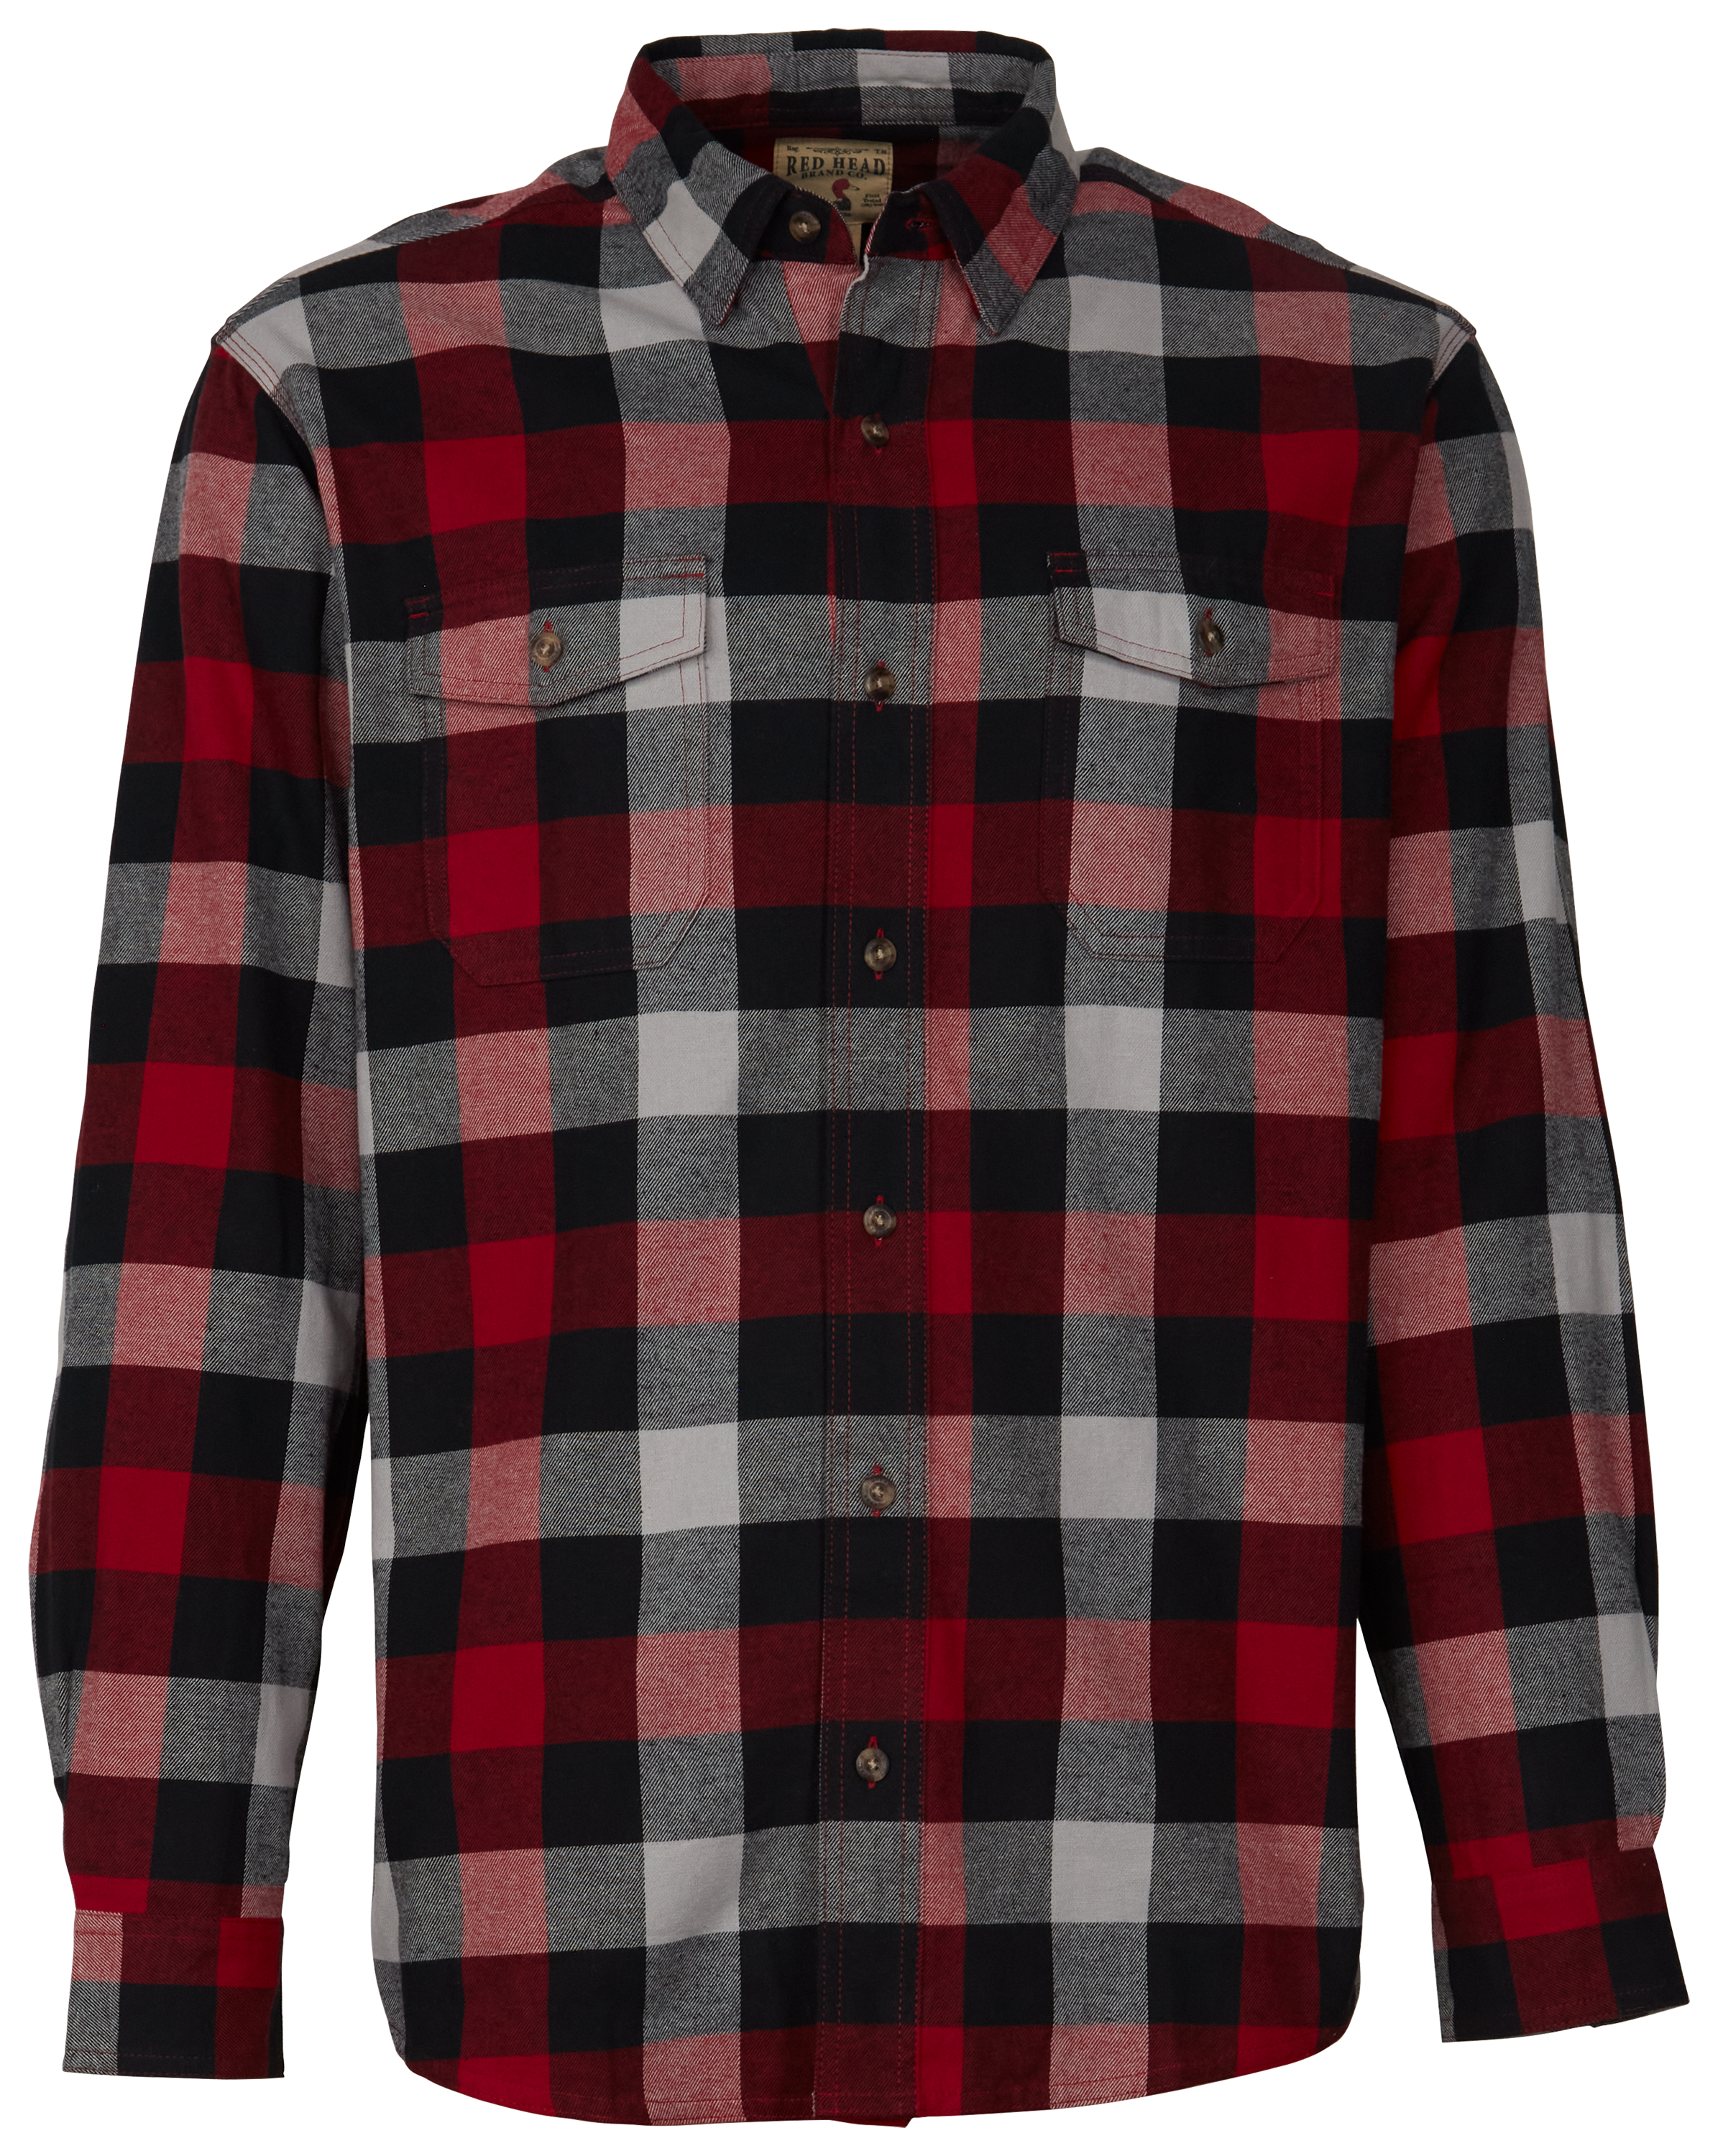 RedHead Buffalo Creek Flannel Long-Sleeve Shirt for Men - Red/Gray - M